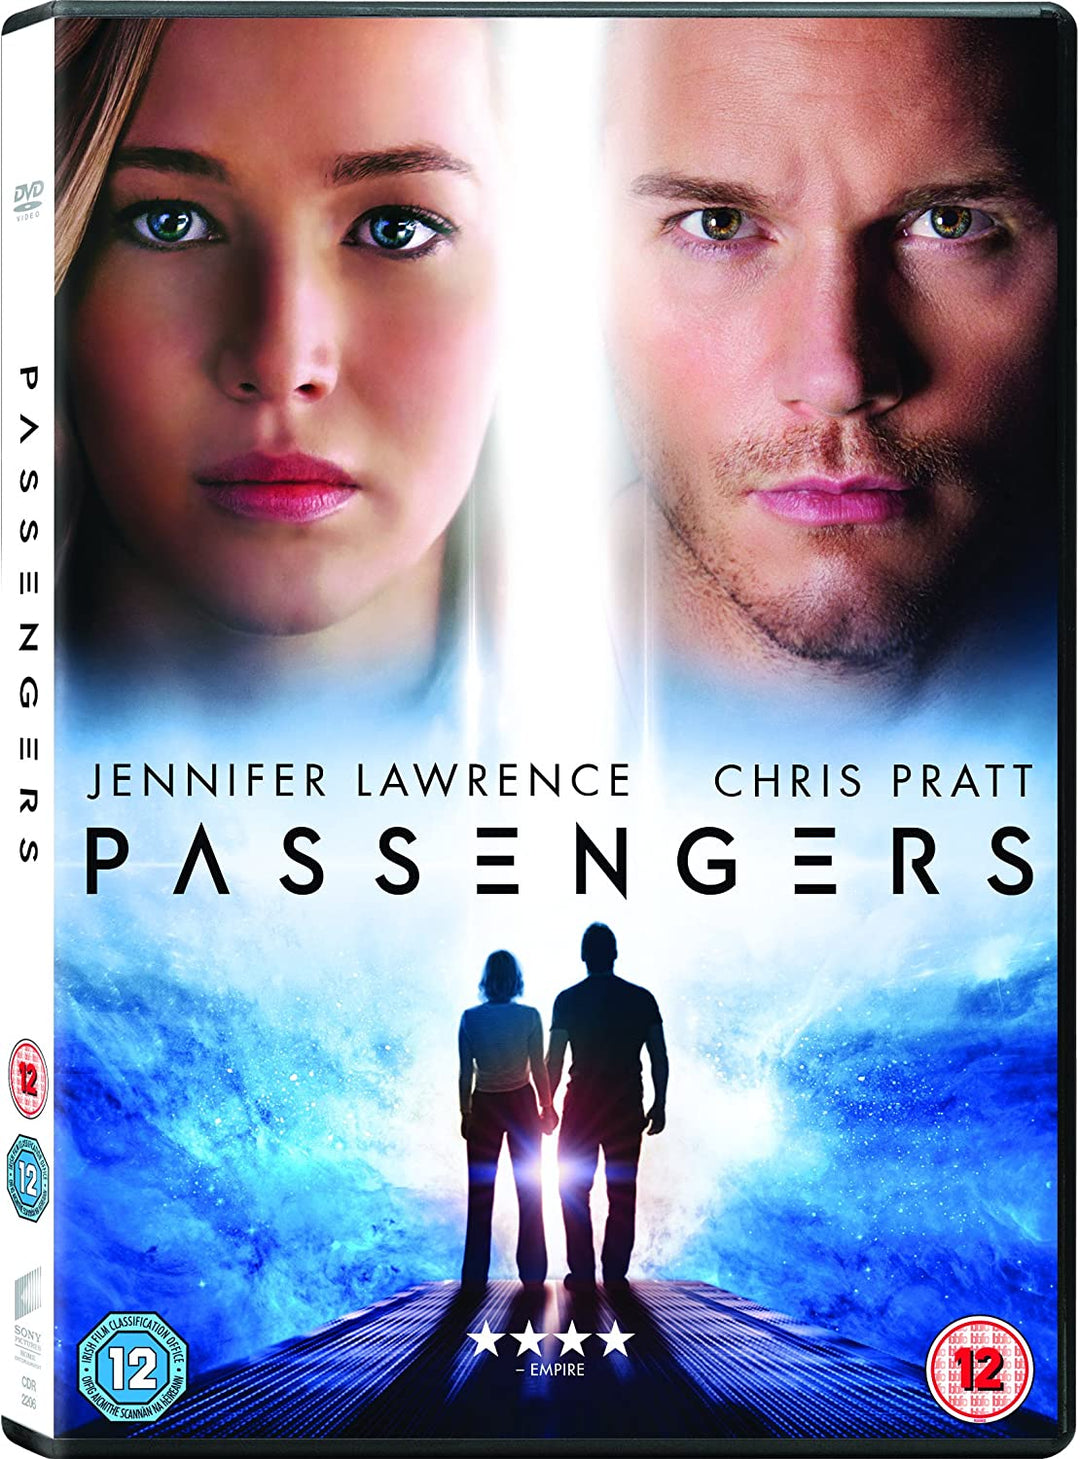 Passengers [DVD] [2017]